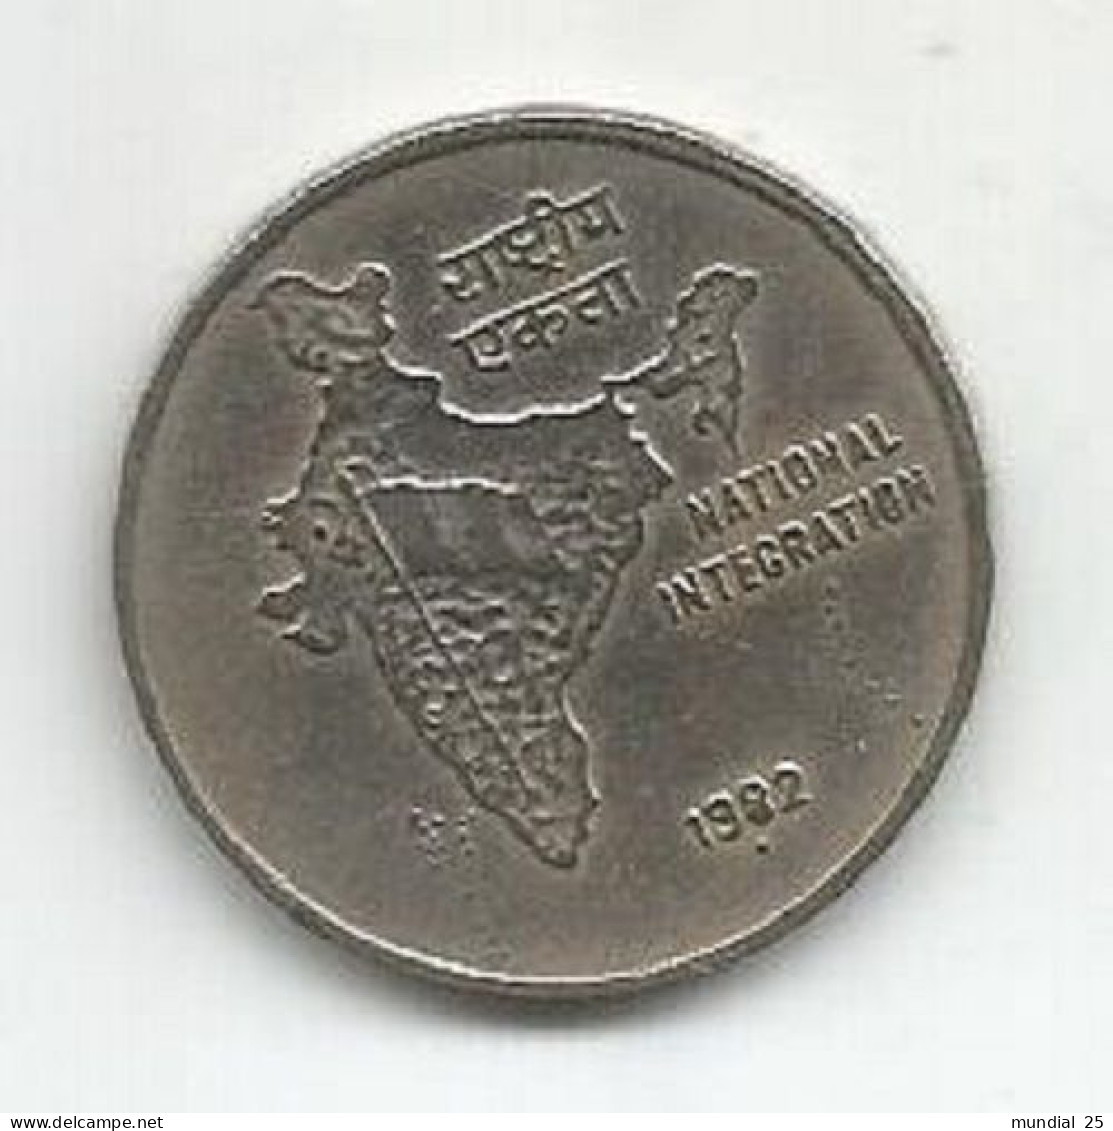 INDIA 50 PAISE 1982 - NATIONAL INTEGRATION - India